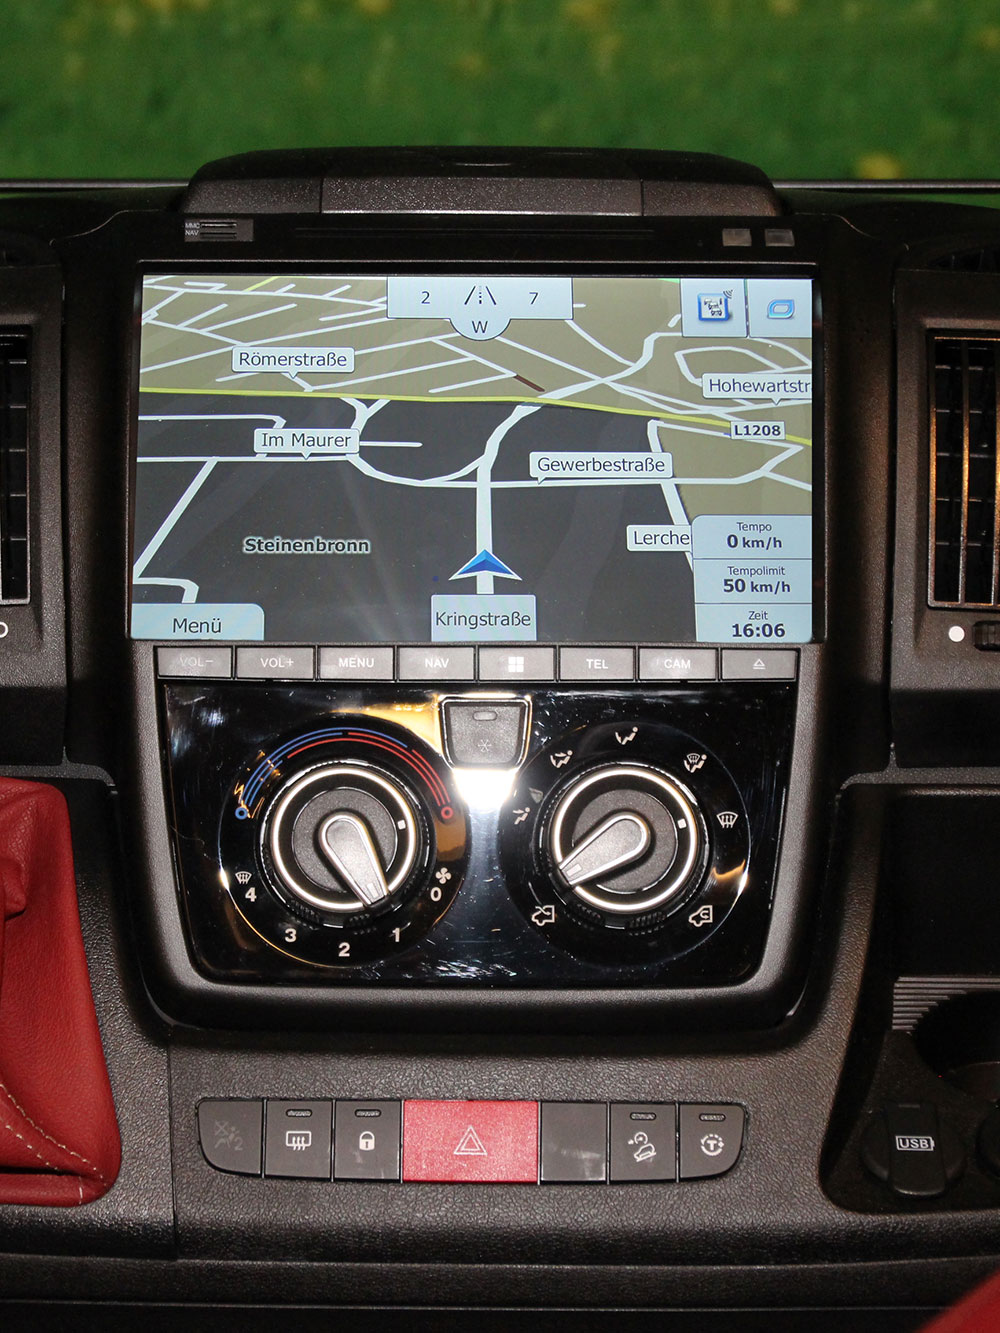 FIAT Ducato navigatie 10.2 Touchscreen parrot carkit apple android auto DAB+